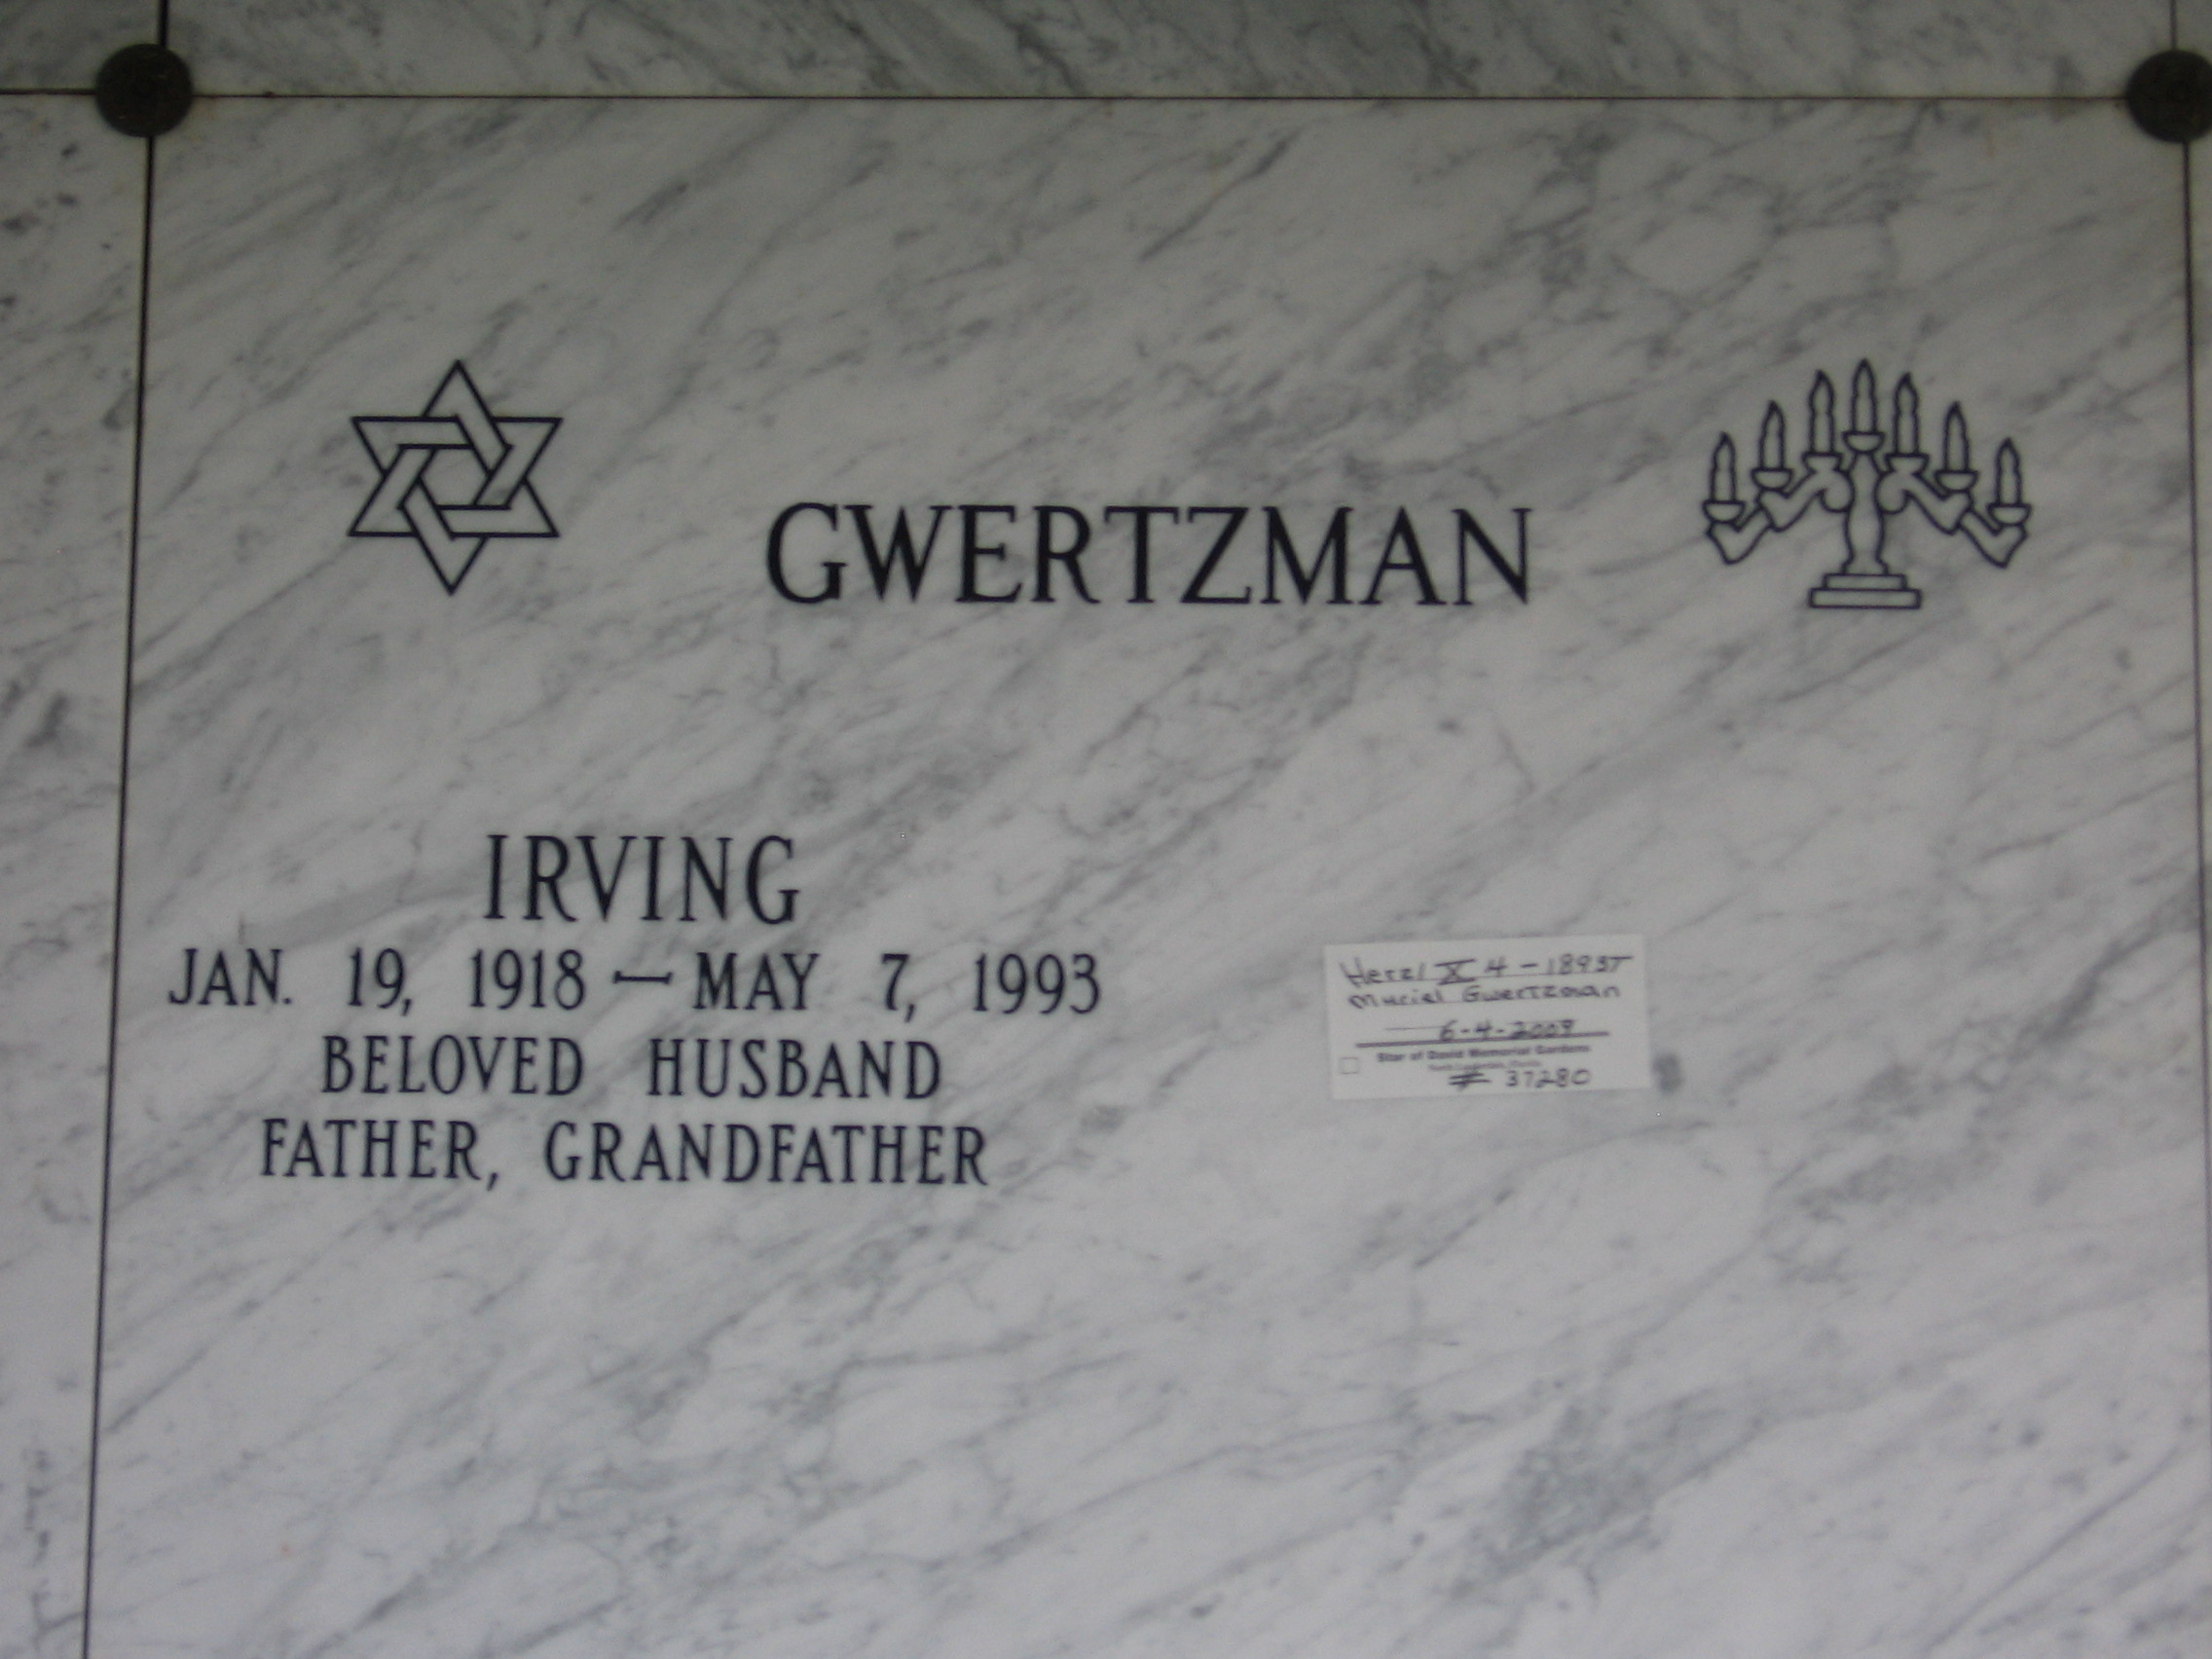 Irving Gwertzman